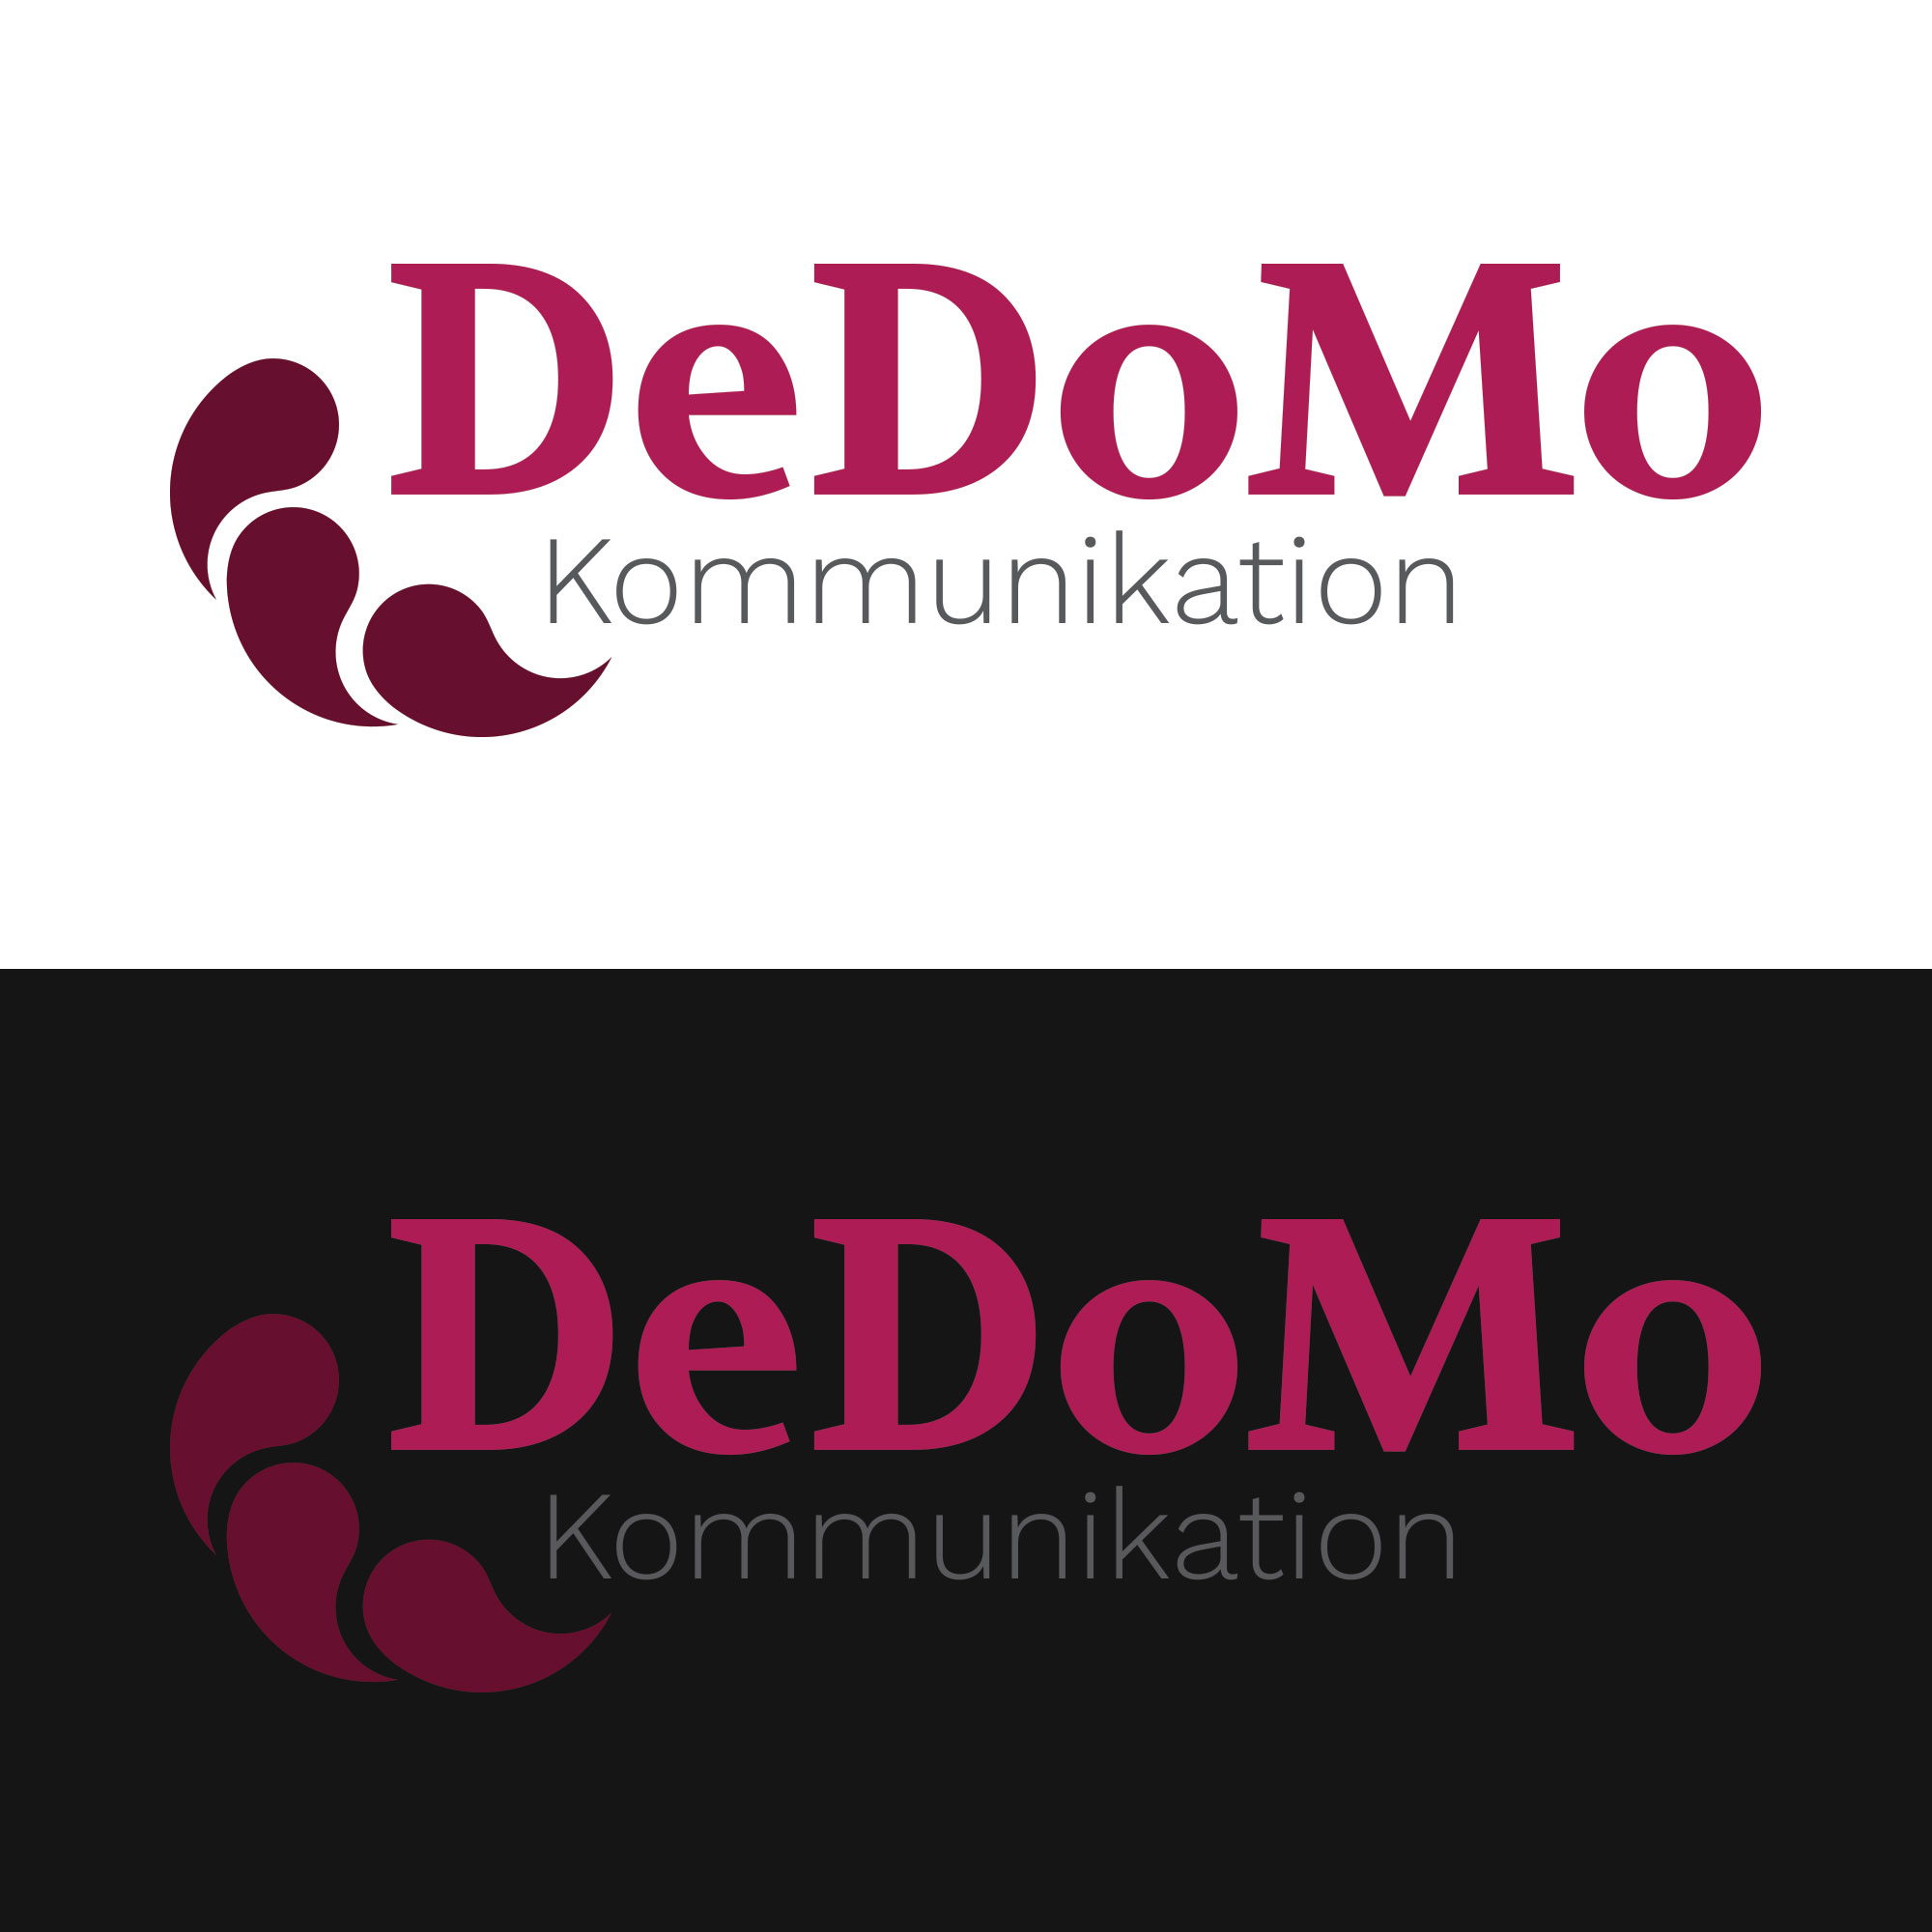 Dedomo Kommunikation - Logo